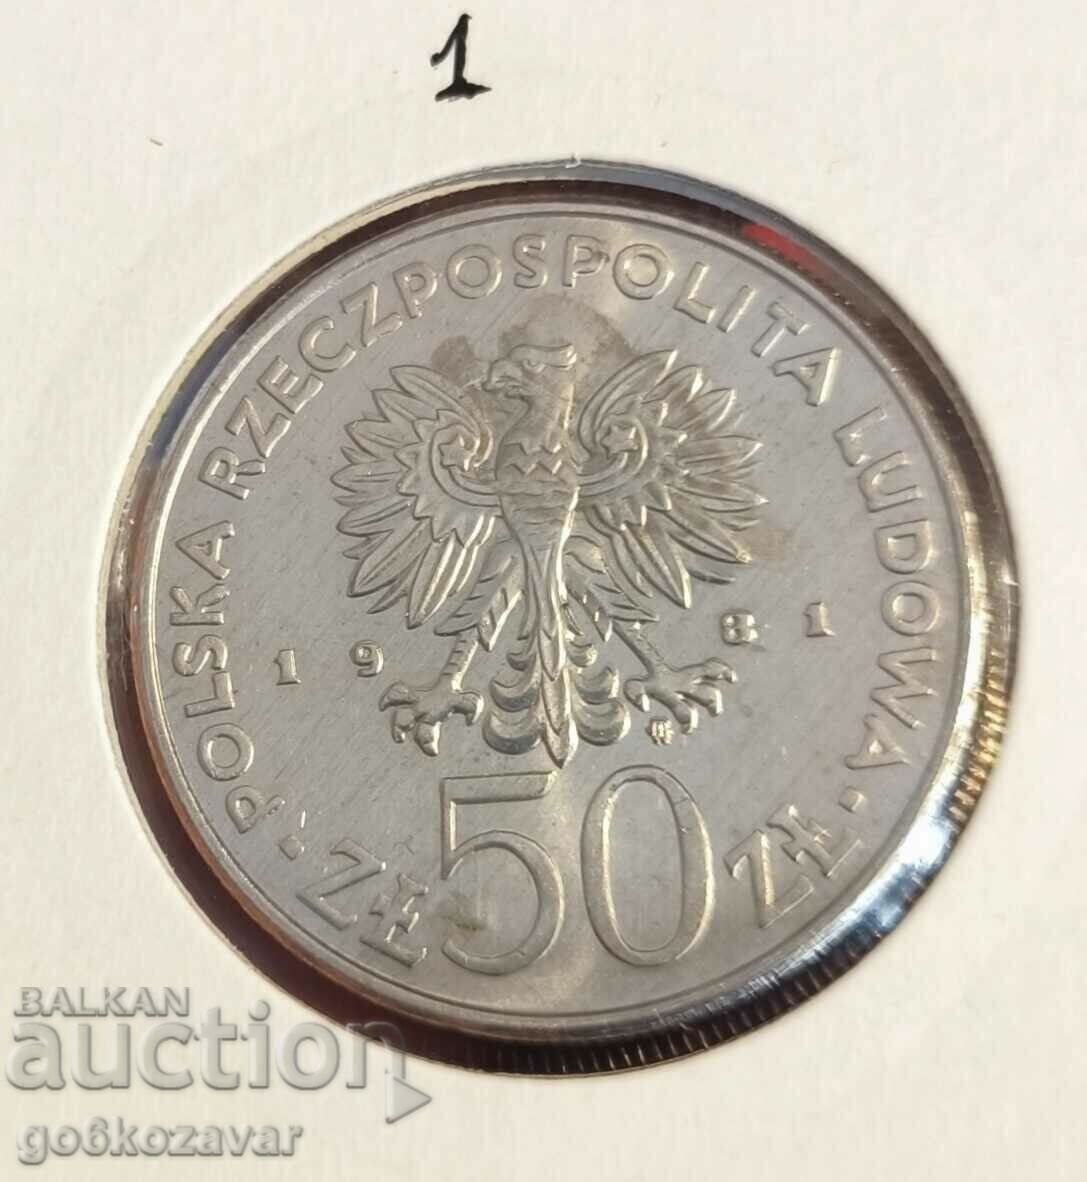 Poland 50 zlotys 1981 UNC